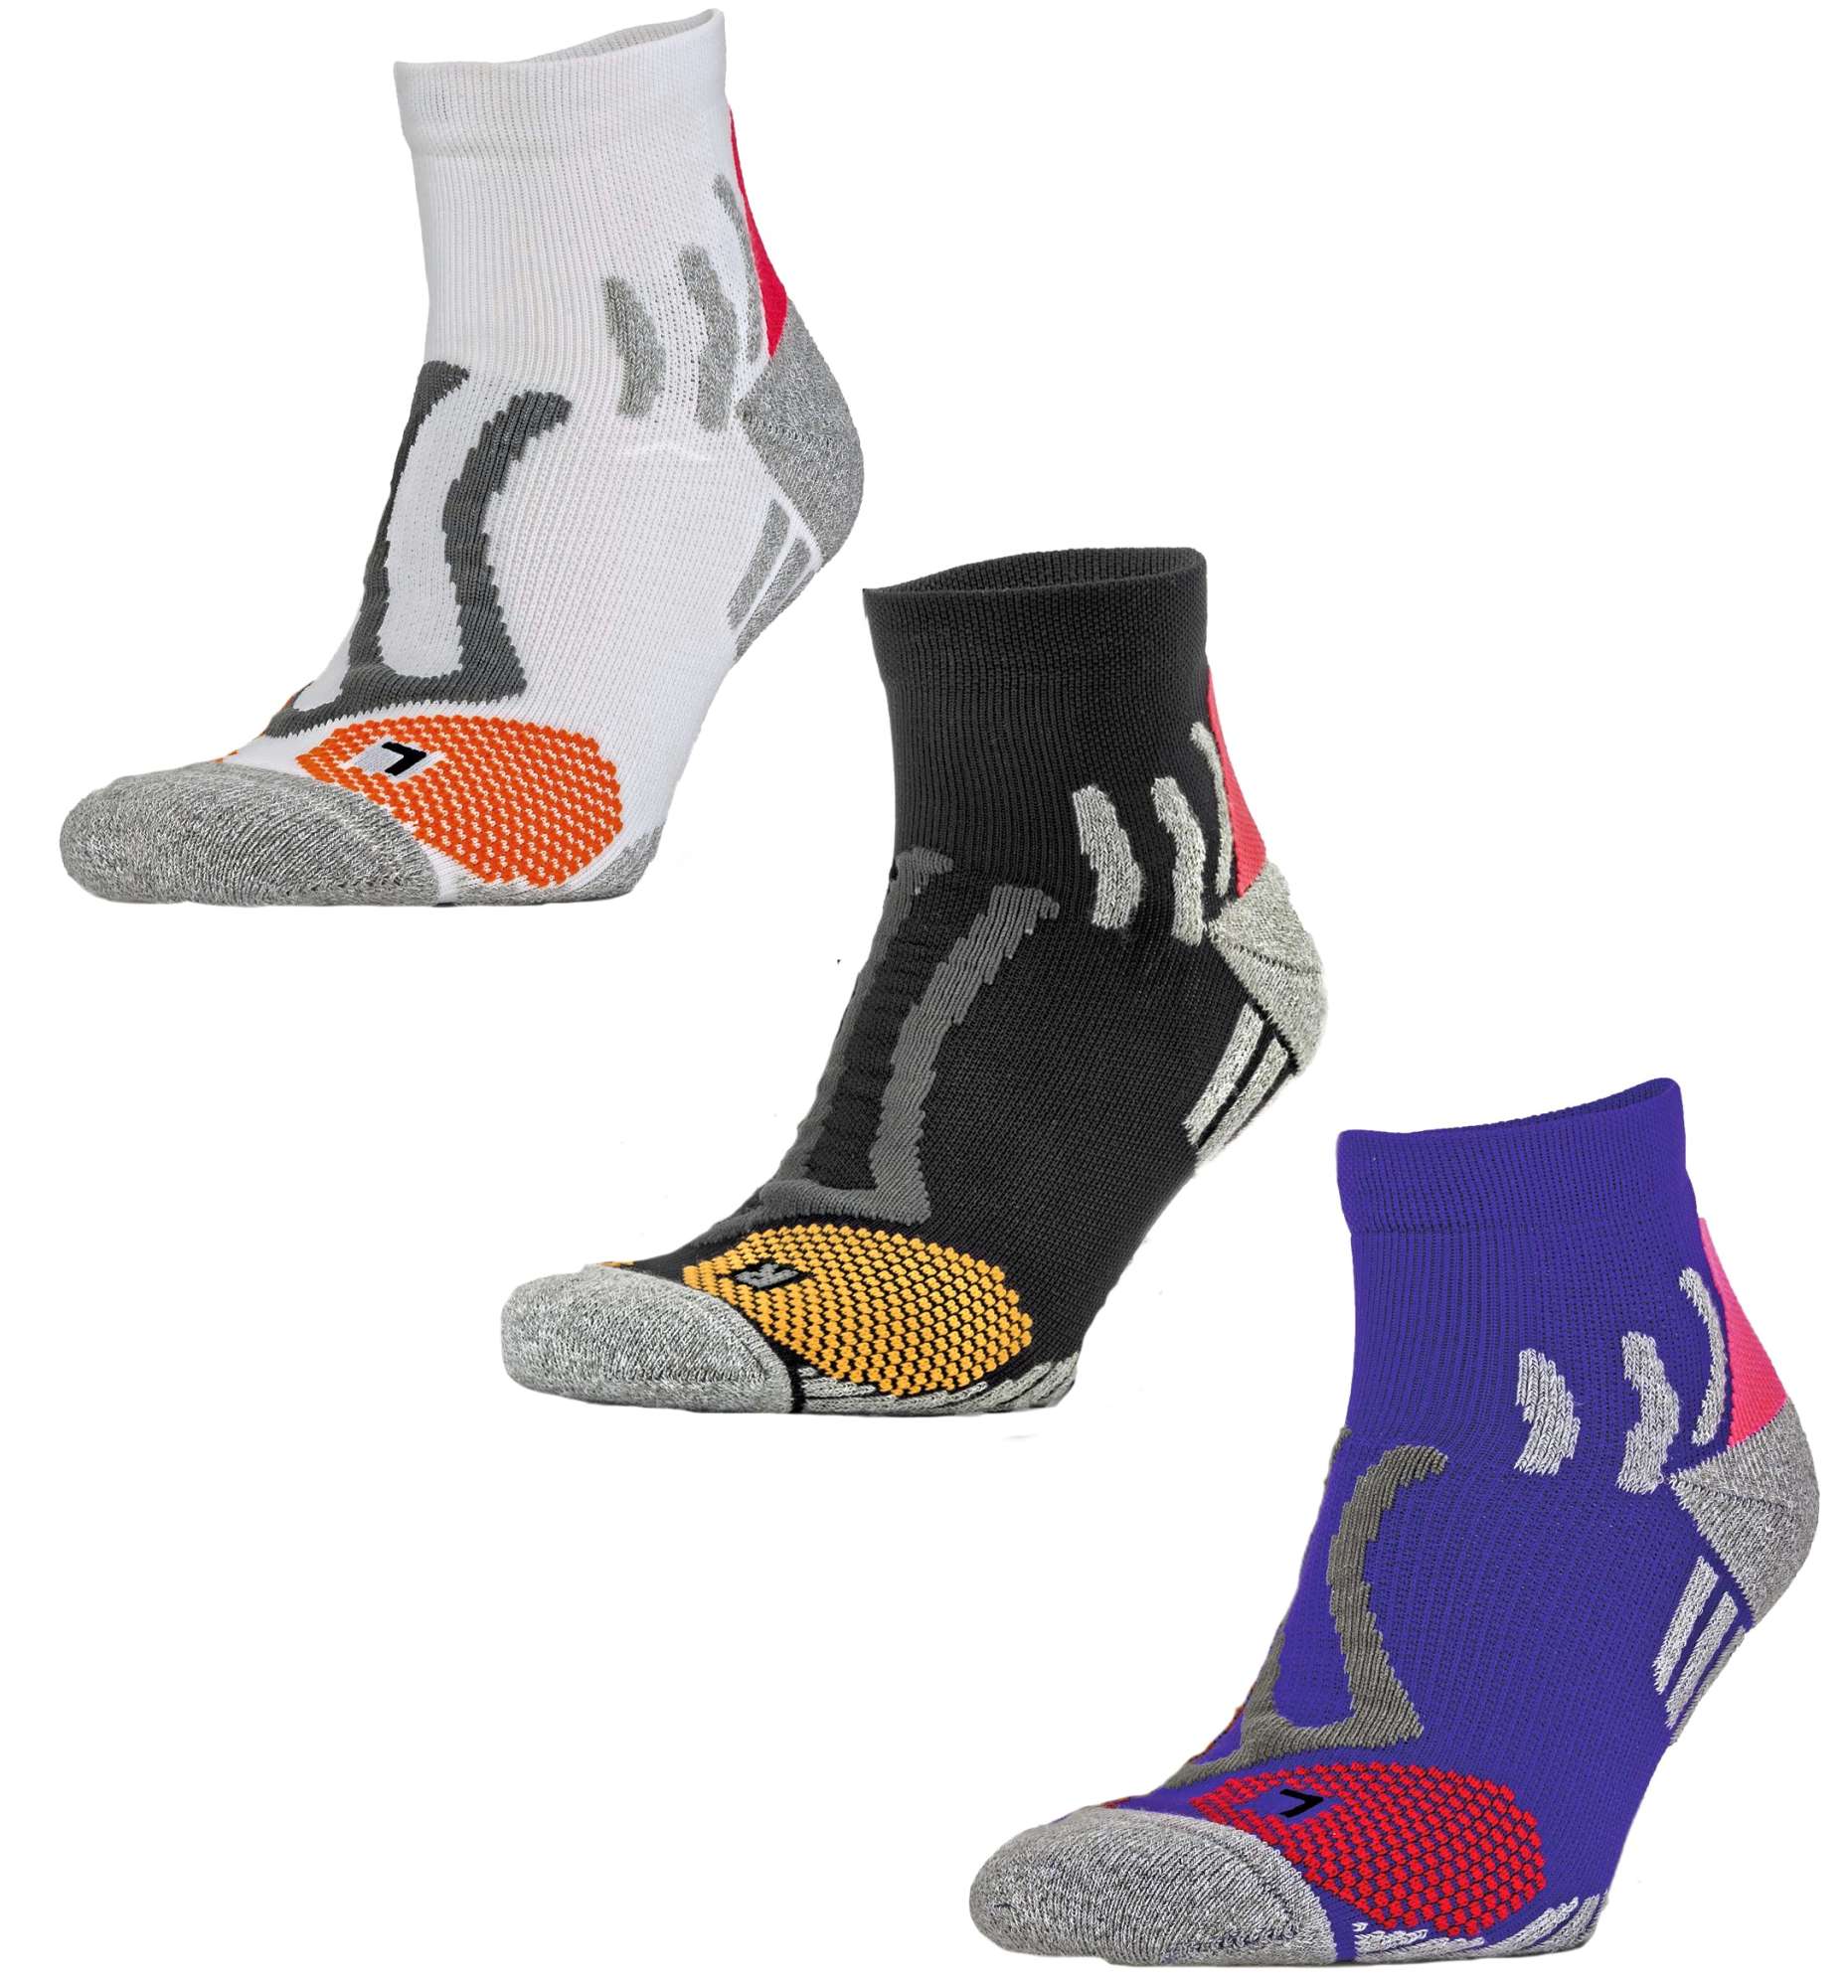 SPIRO Technical Compression Coolmax Sports Socks Purple S/M (RT294)